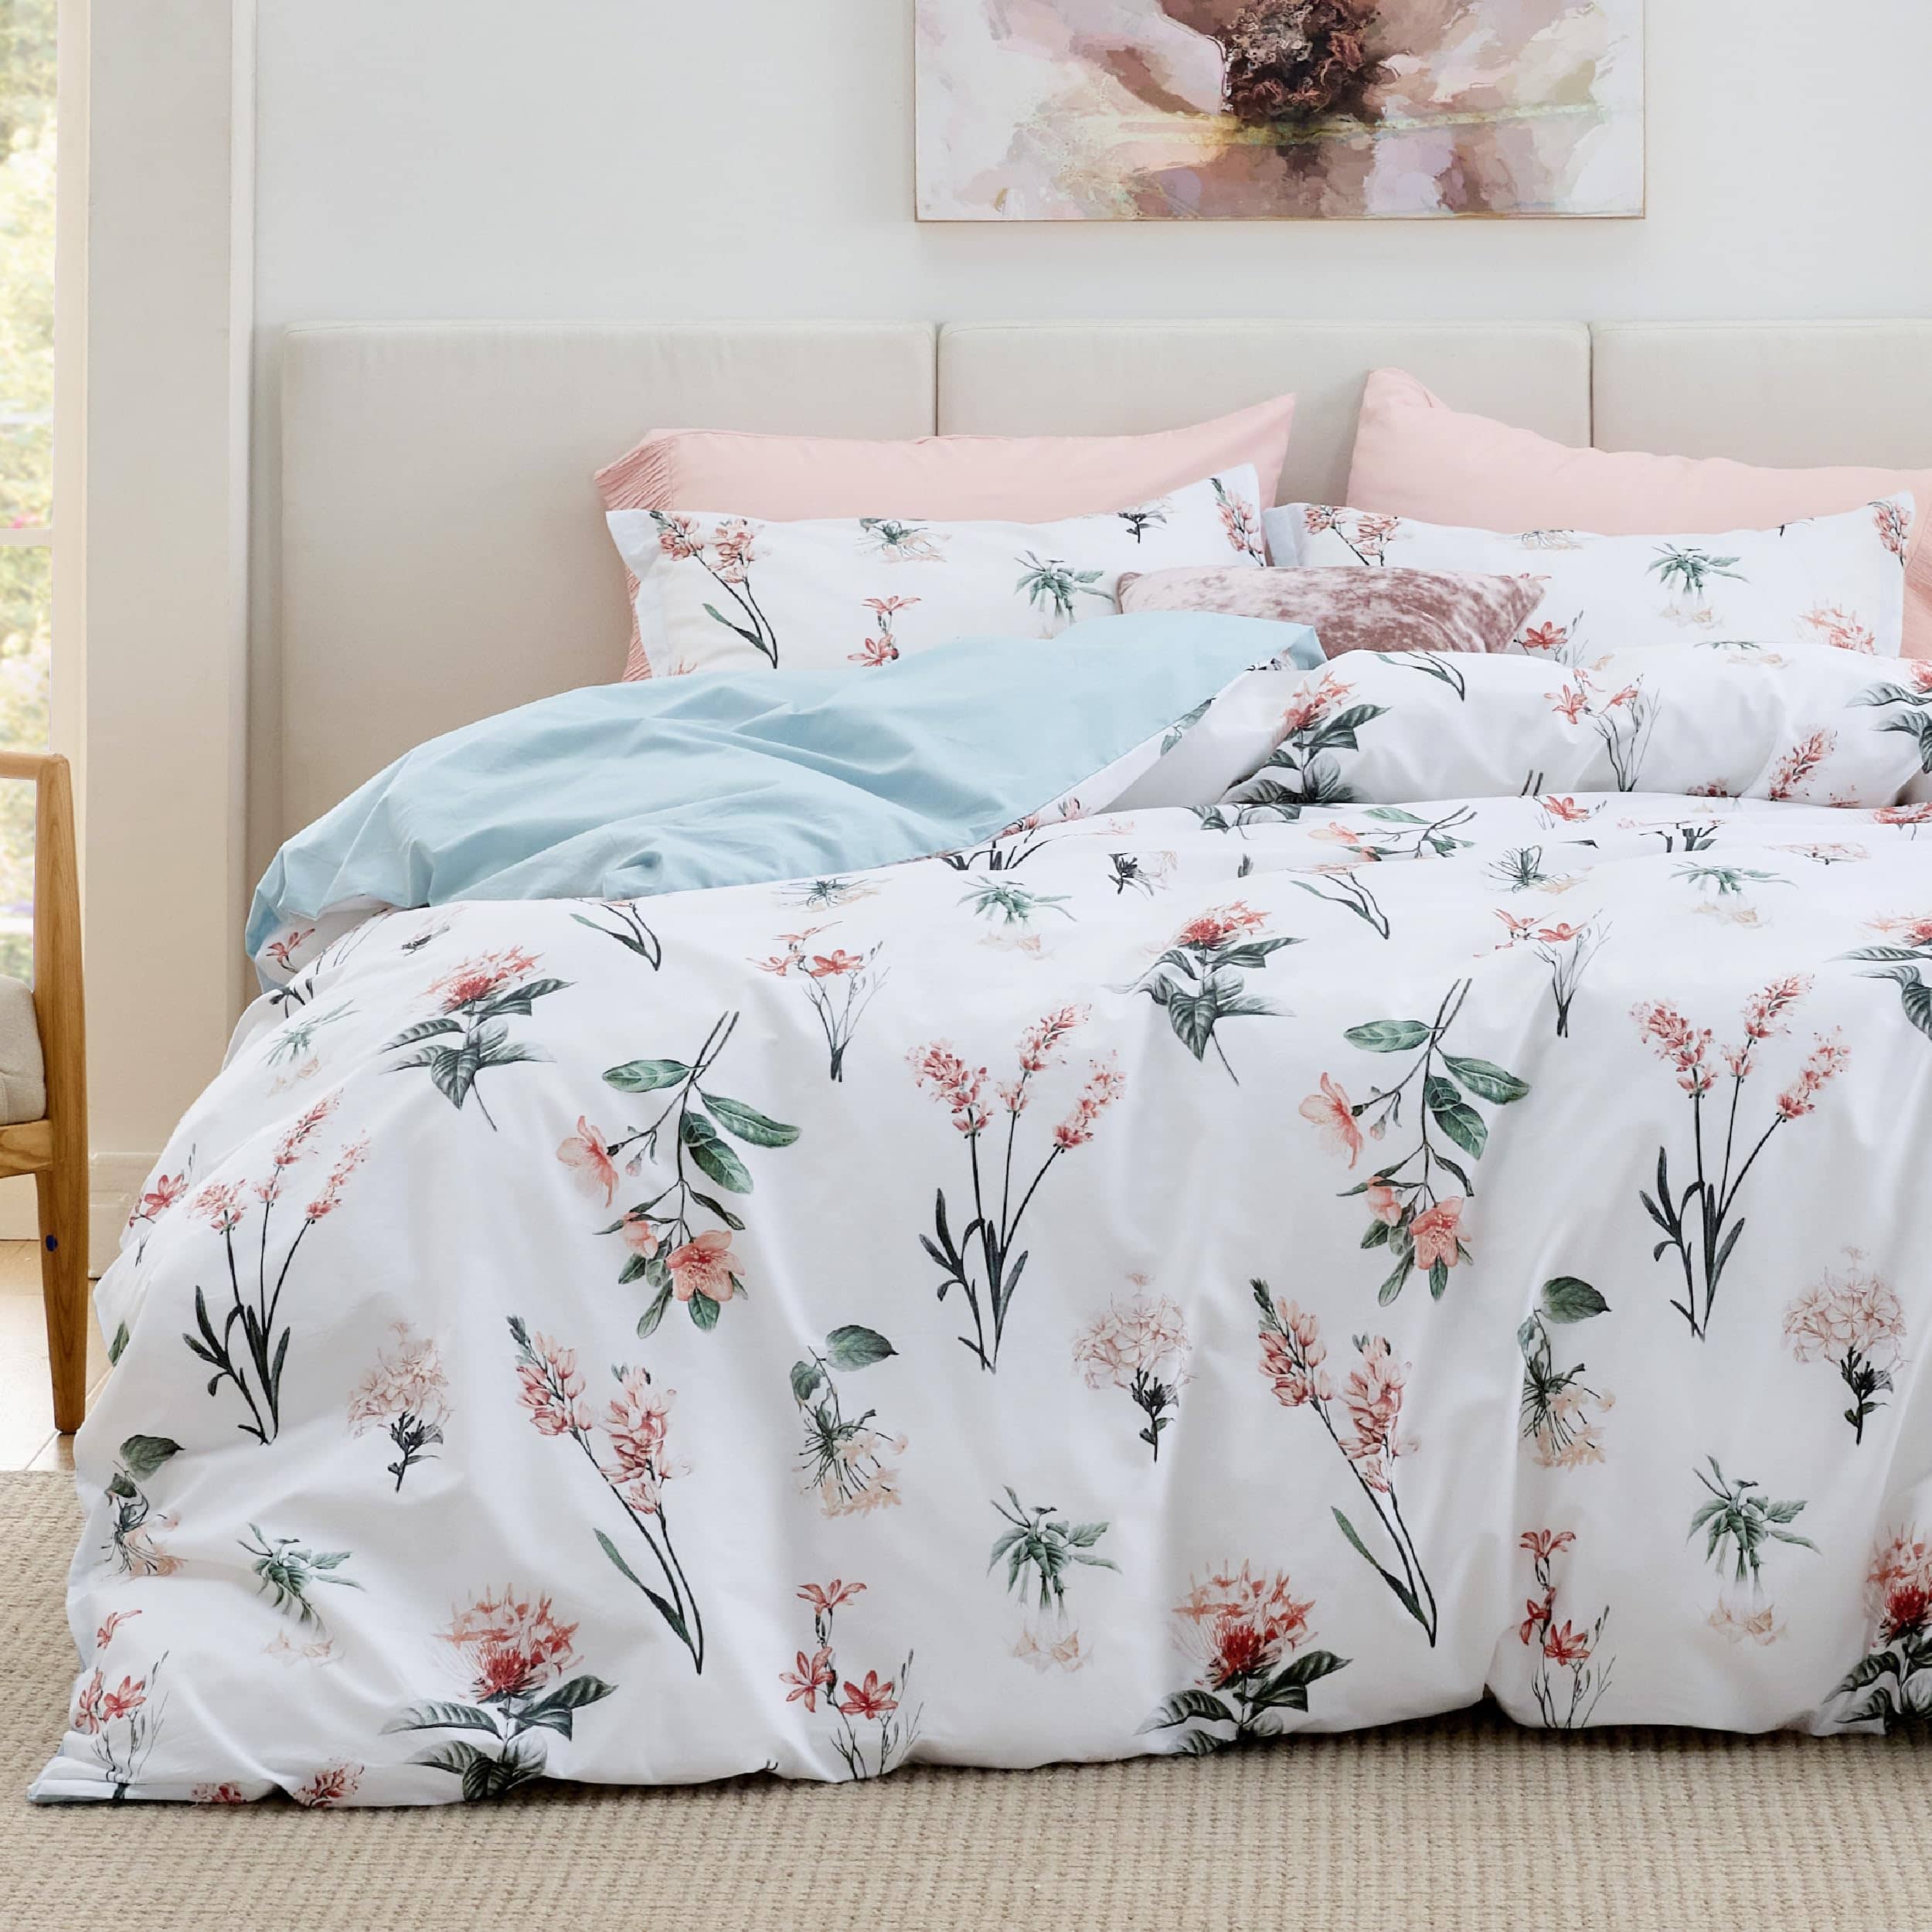 Bedsure 3 Pieces Sage Green Floral Comforter Sets, 1 Soft